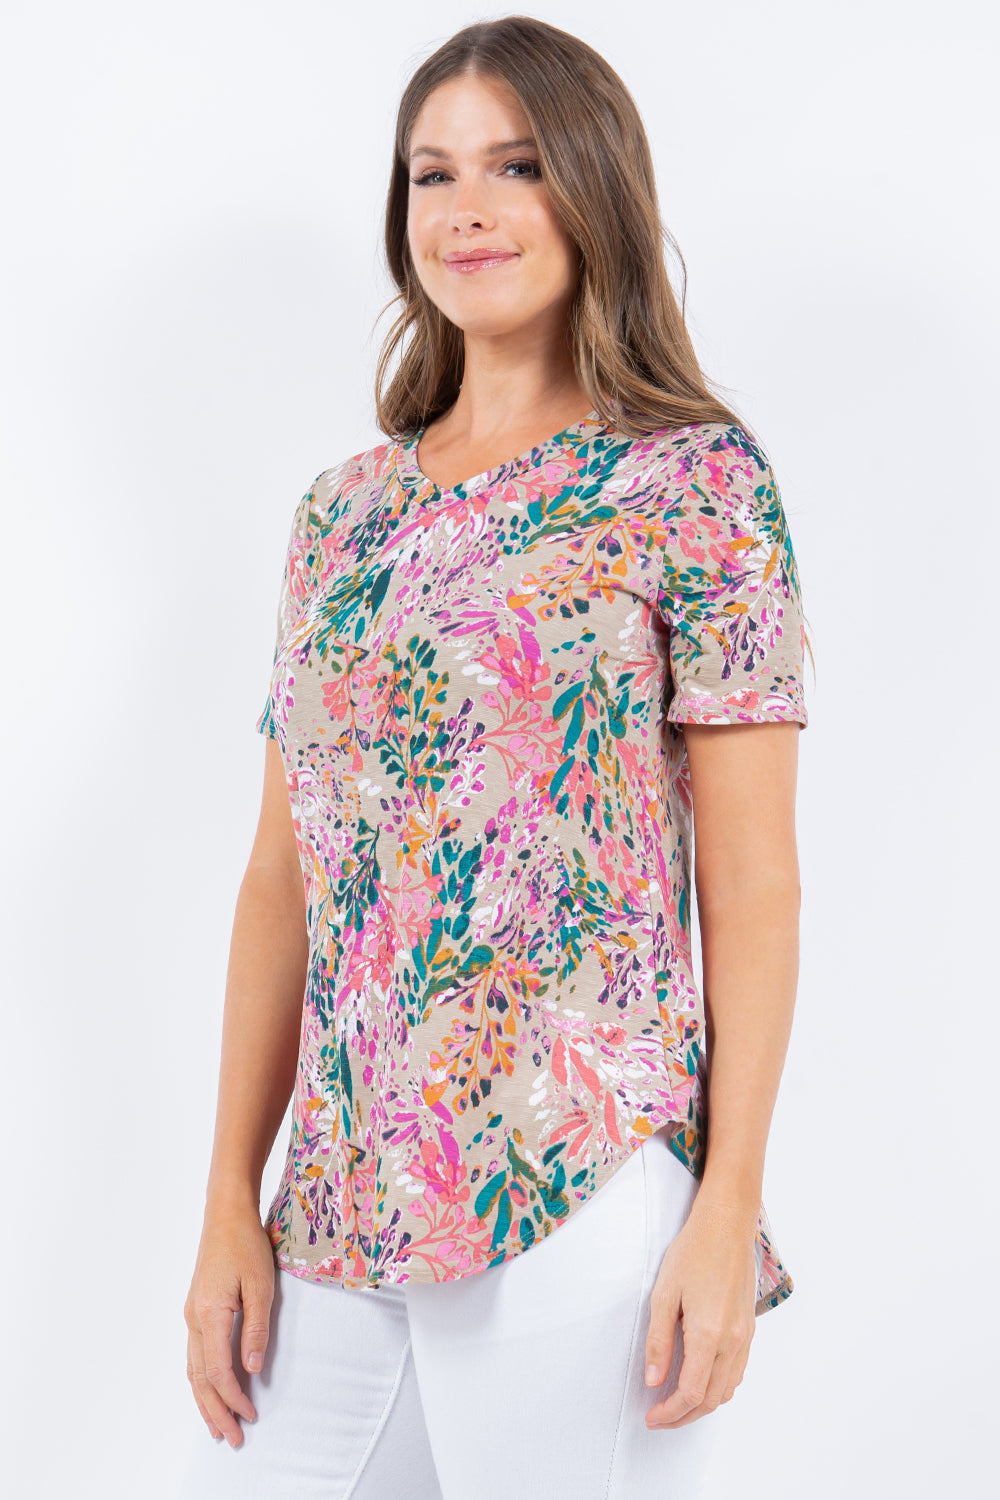 boutique shopping pensacola floral top blouse clothing multi-color 